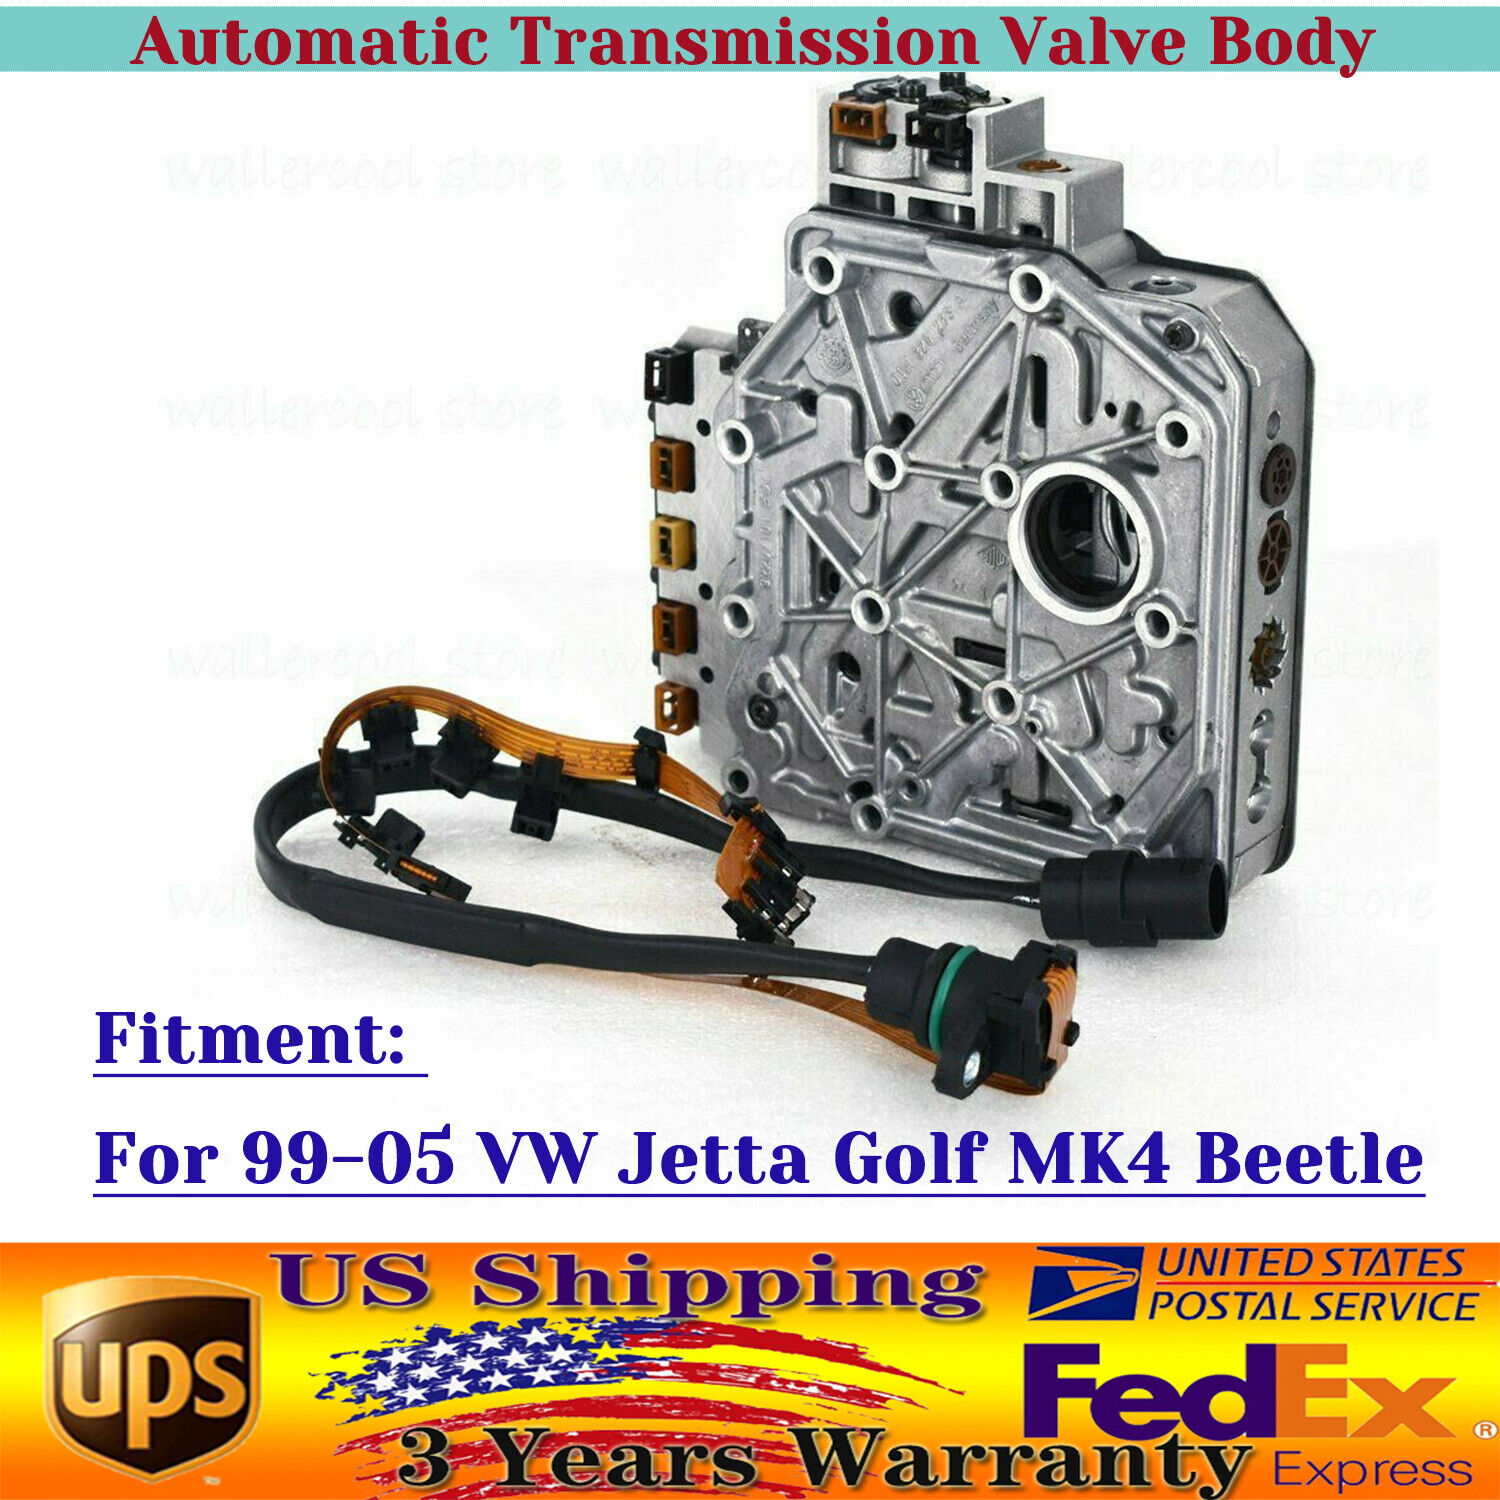 Automatic Transmission Valve Body Fits 99-05 VW Jetta Beetle 2.0L 2.5L Engine